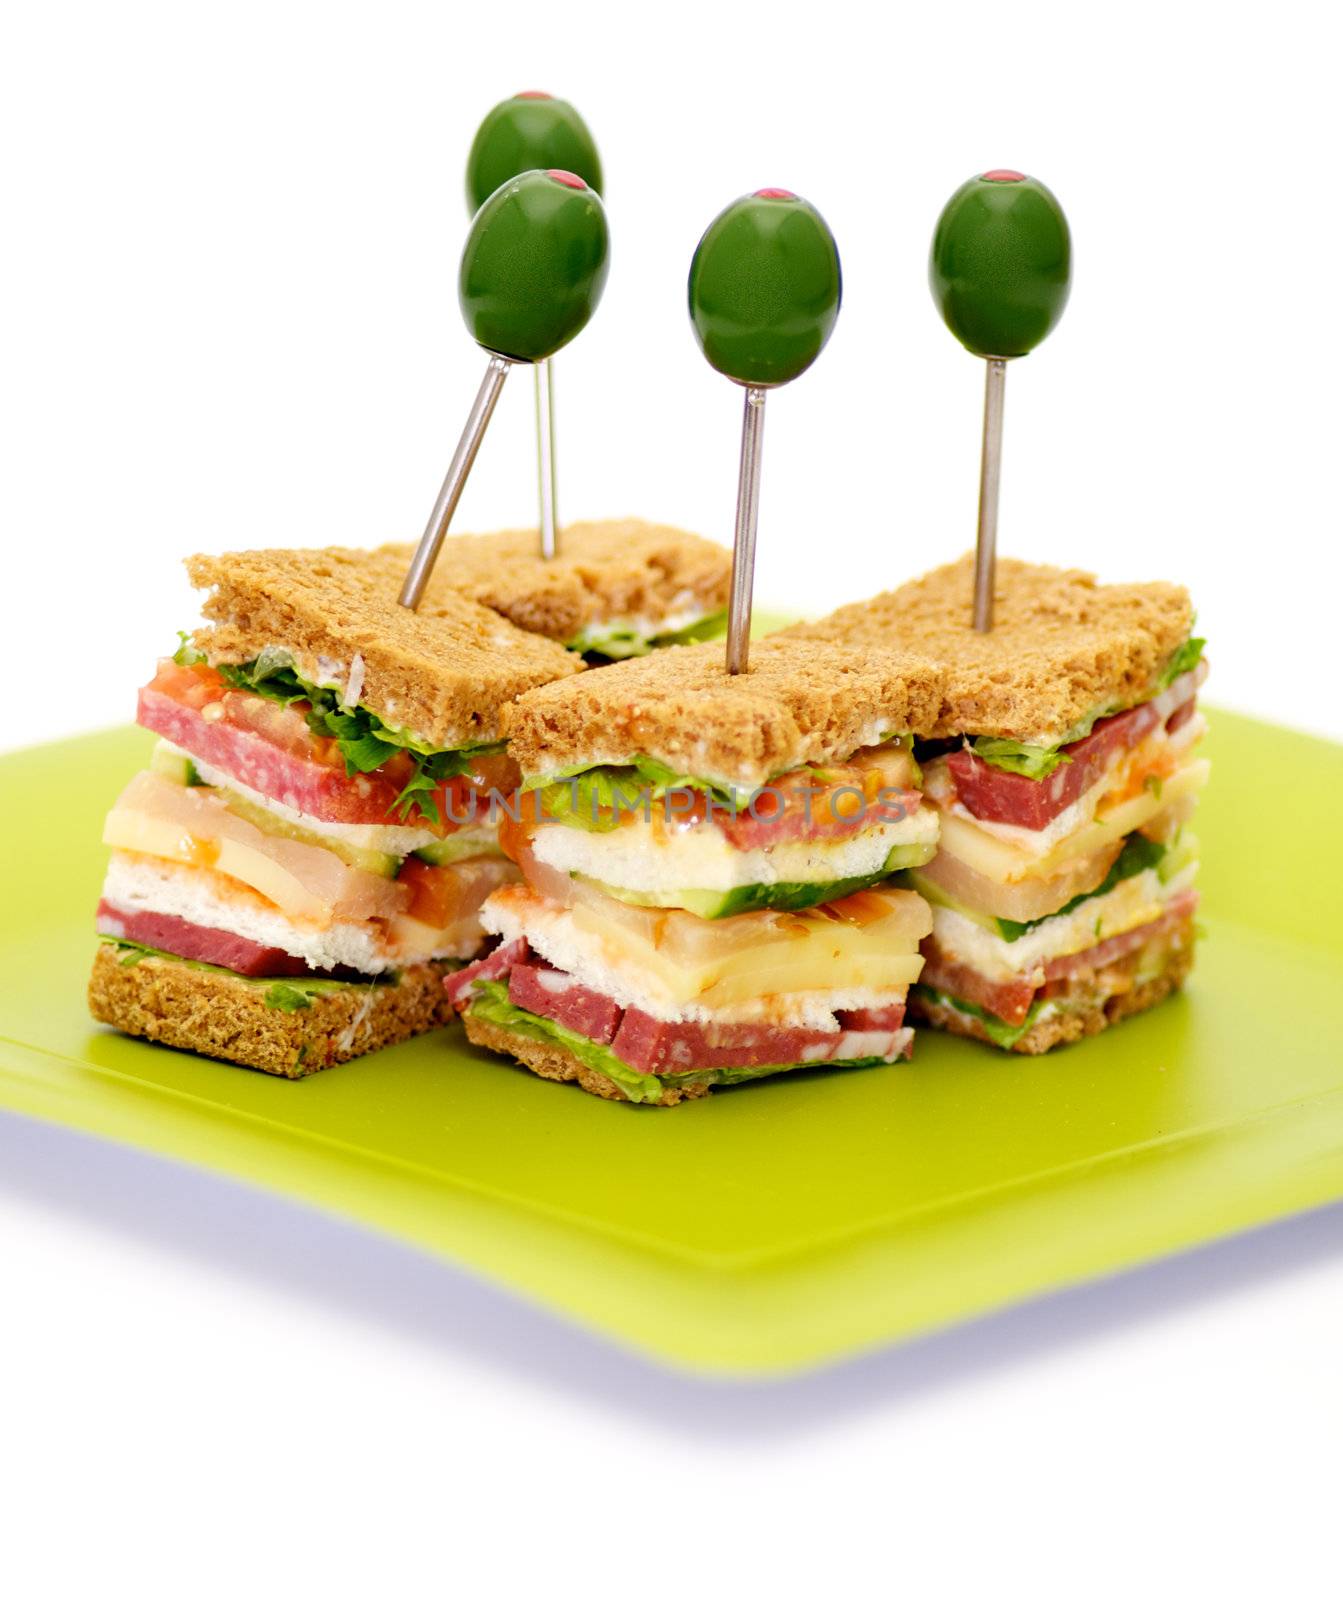 Snacks of Classical BLT Club Sandwich by zhekos